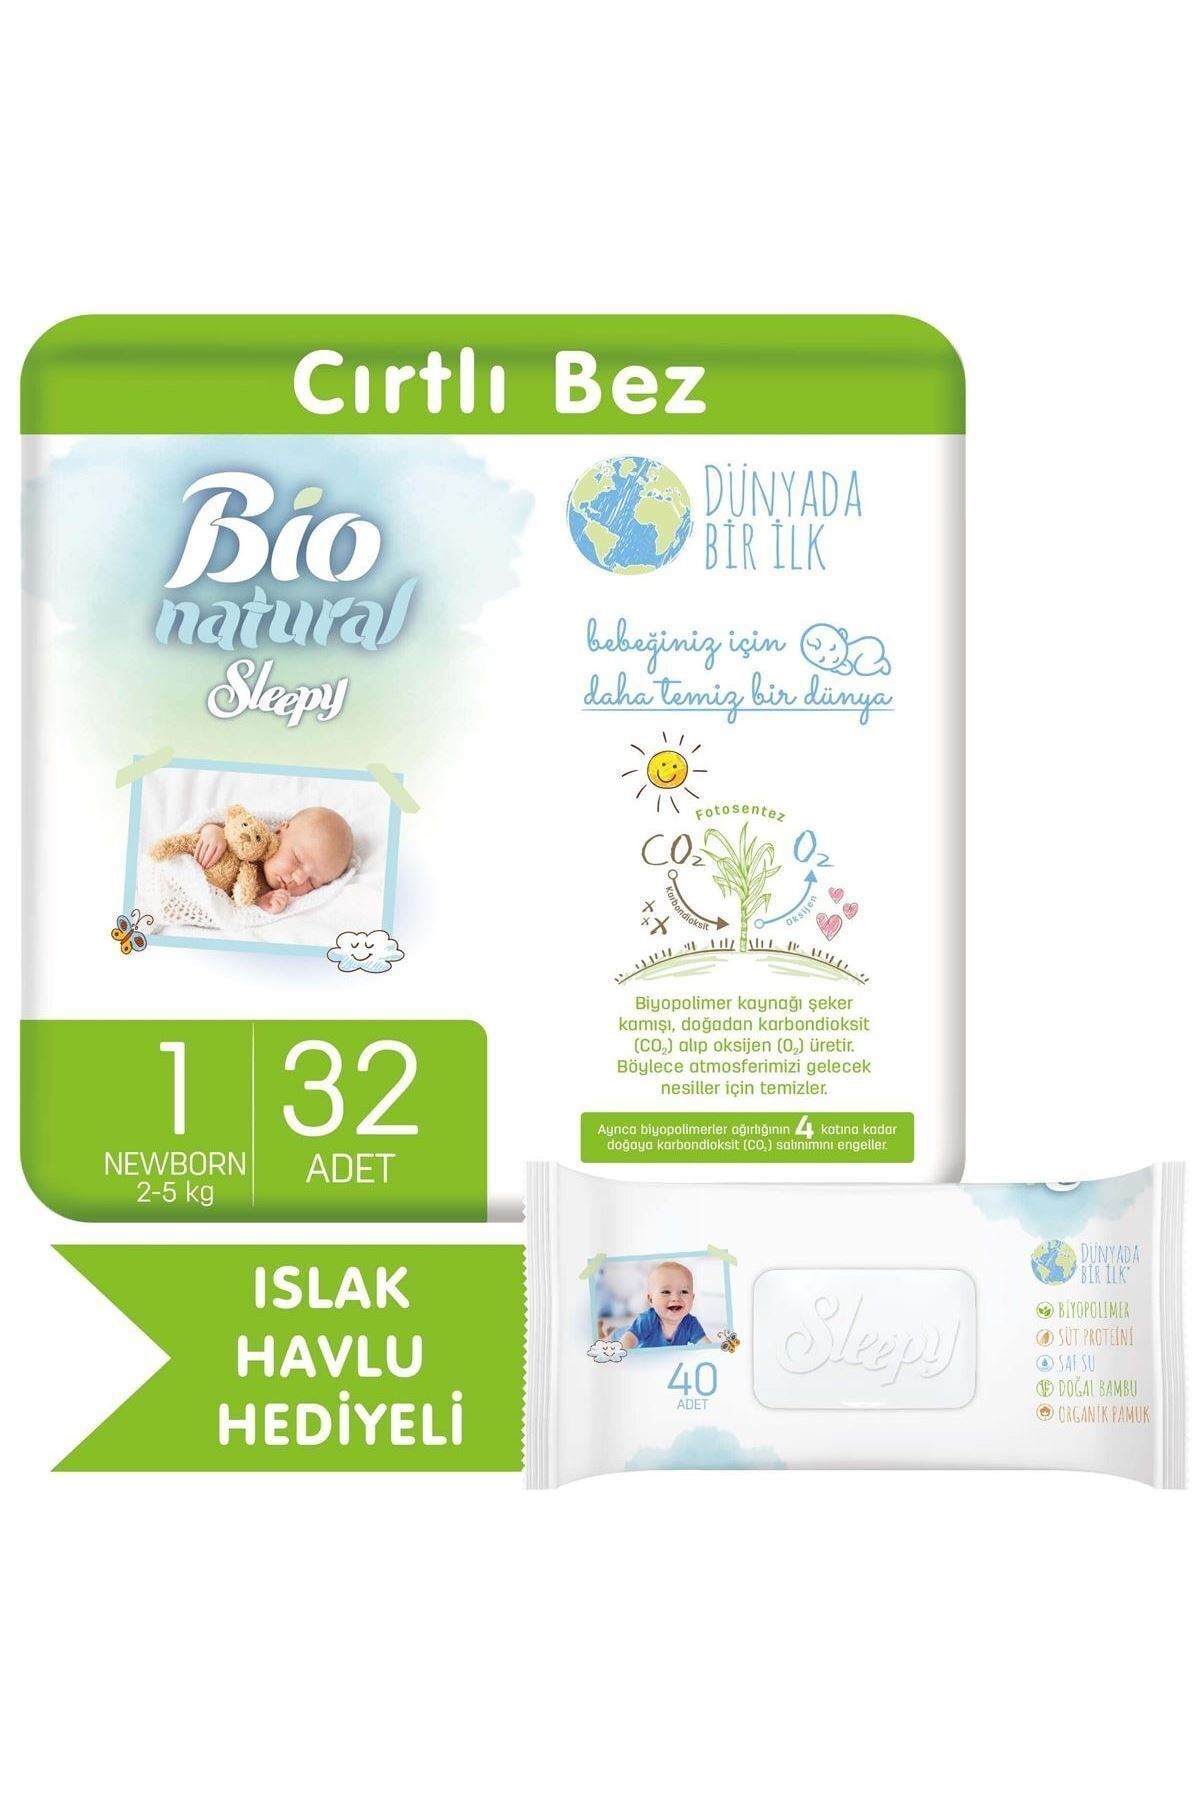 Sleepy Bio Natural Bebek Bezi 1 Numara Yenidoğan 32 Adet + Bio Natural Islak Havlu Hediyeli